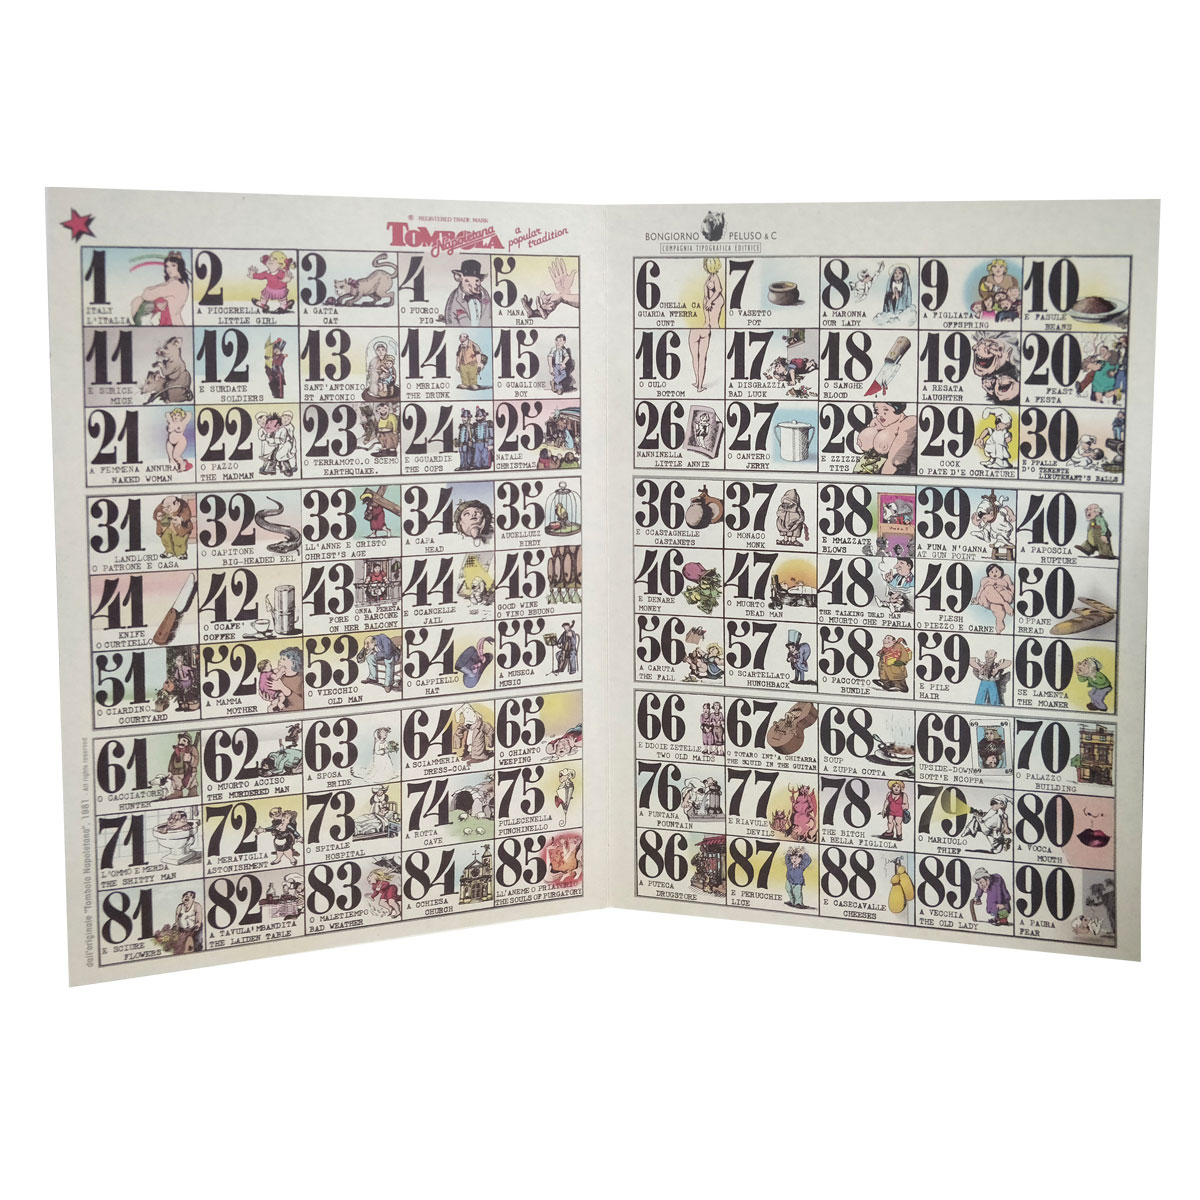 Kit tombola smorfia napoletana completa con panariello e numeri 24 cartelle 